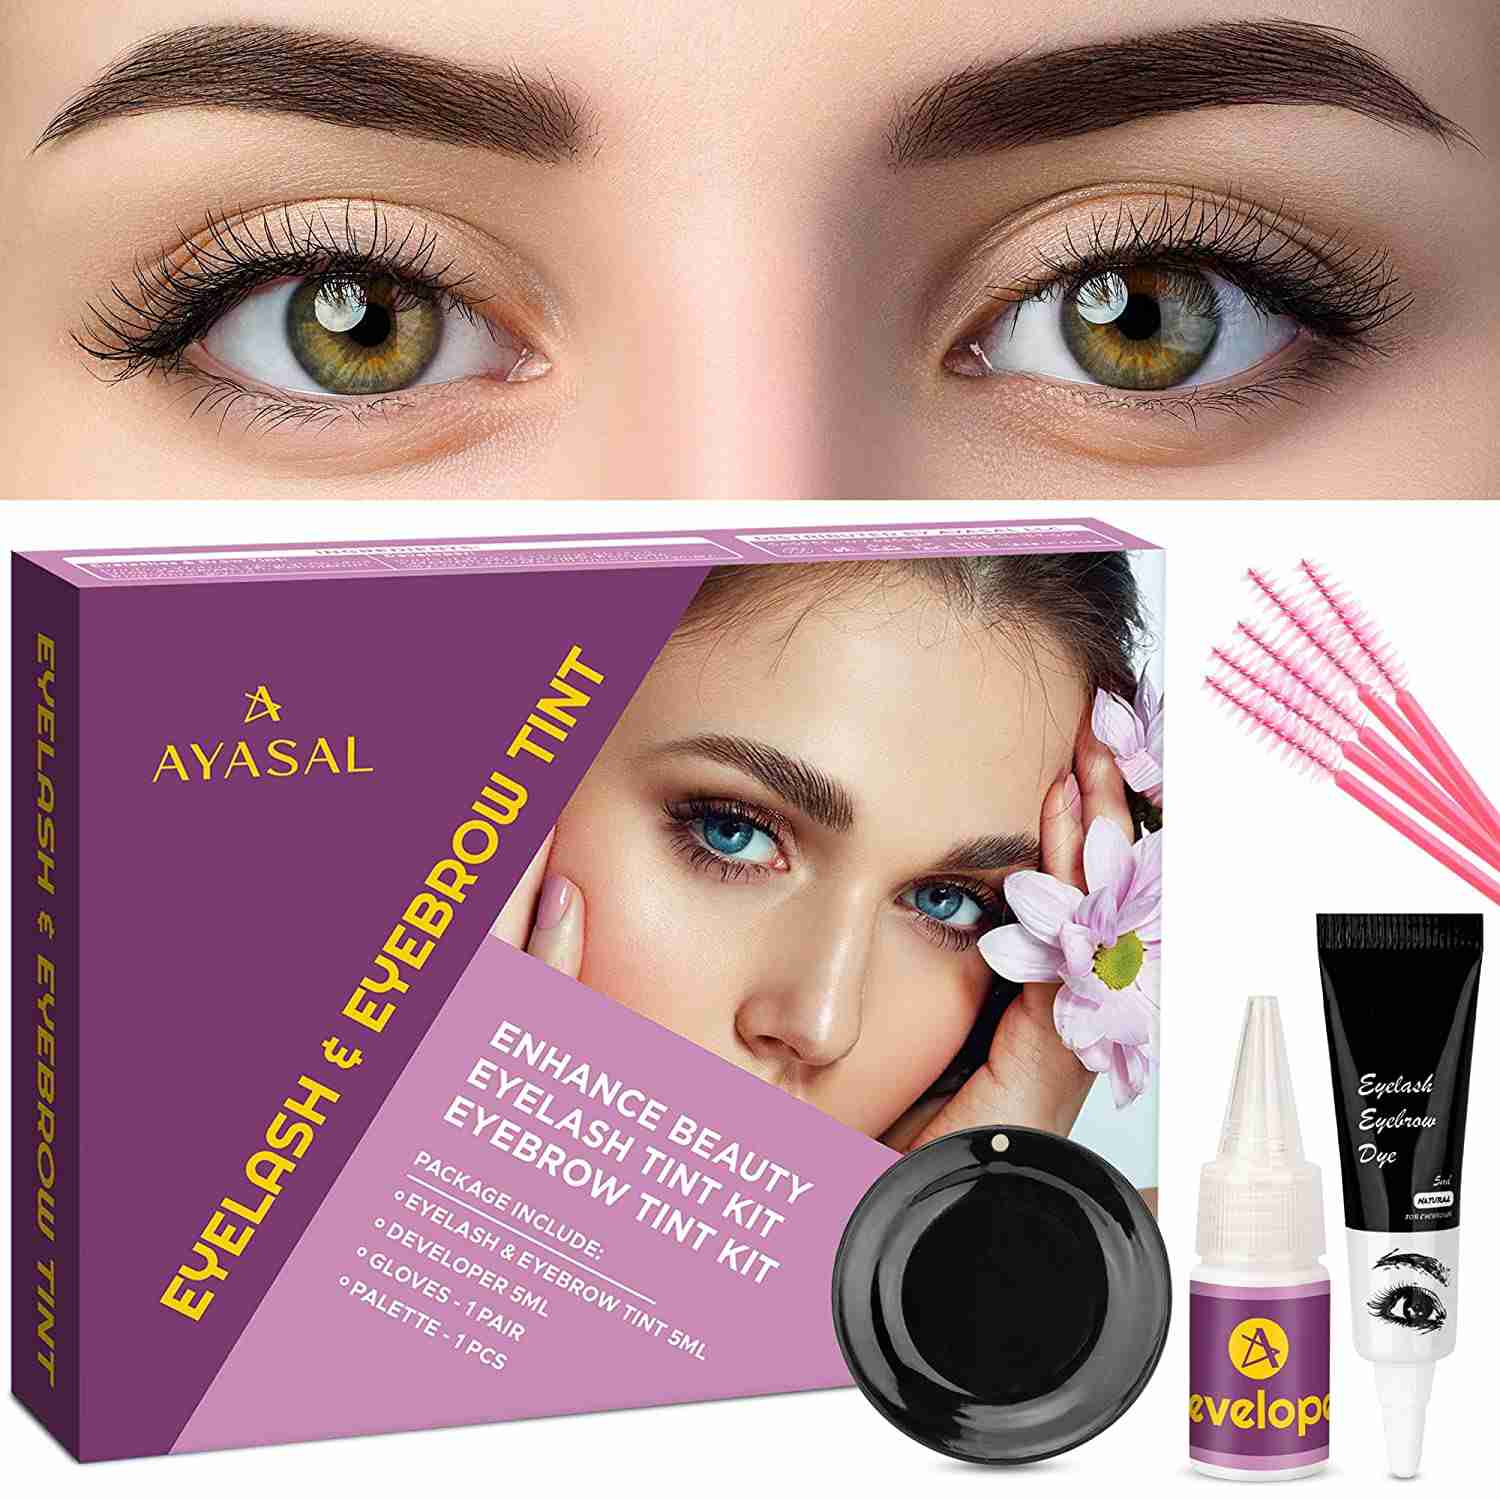 ayasal-eyebrow-coloring-kit for cheap